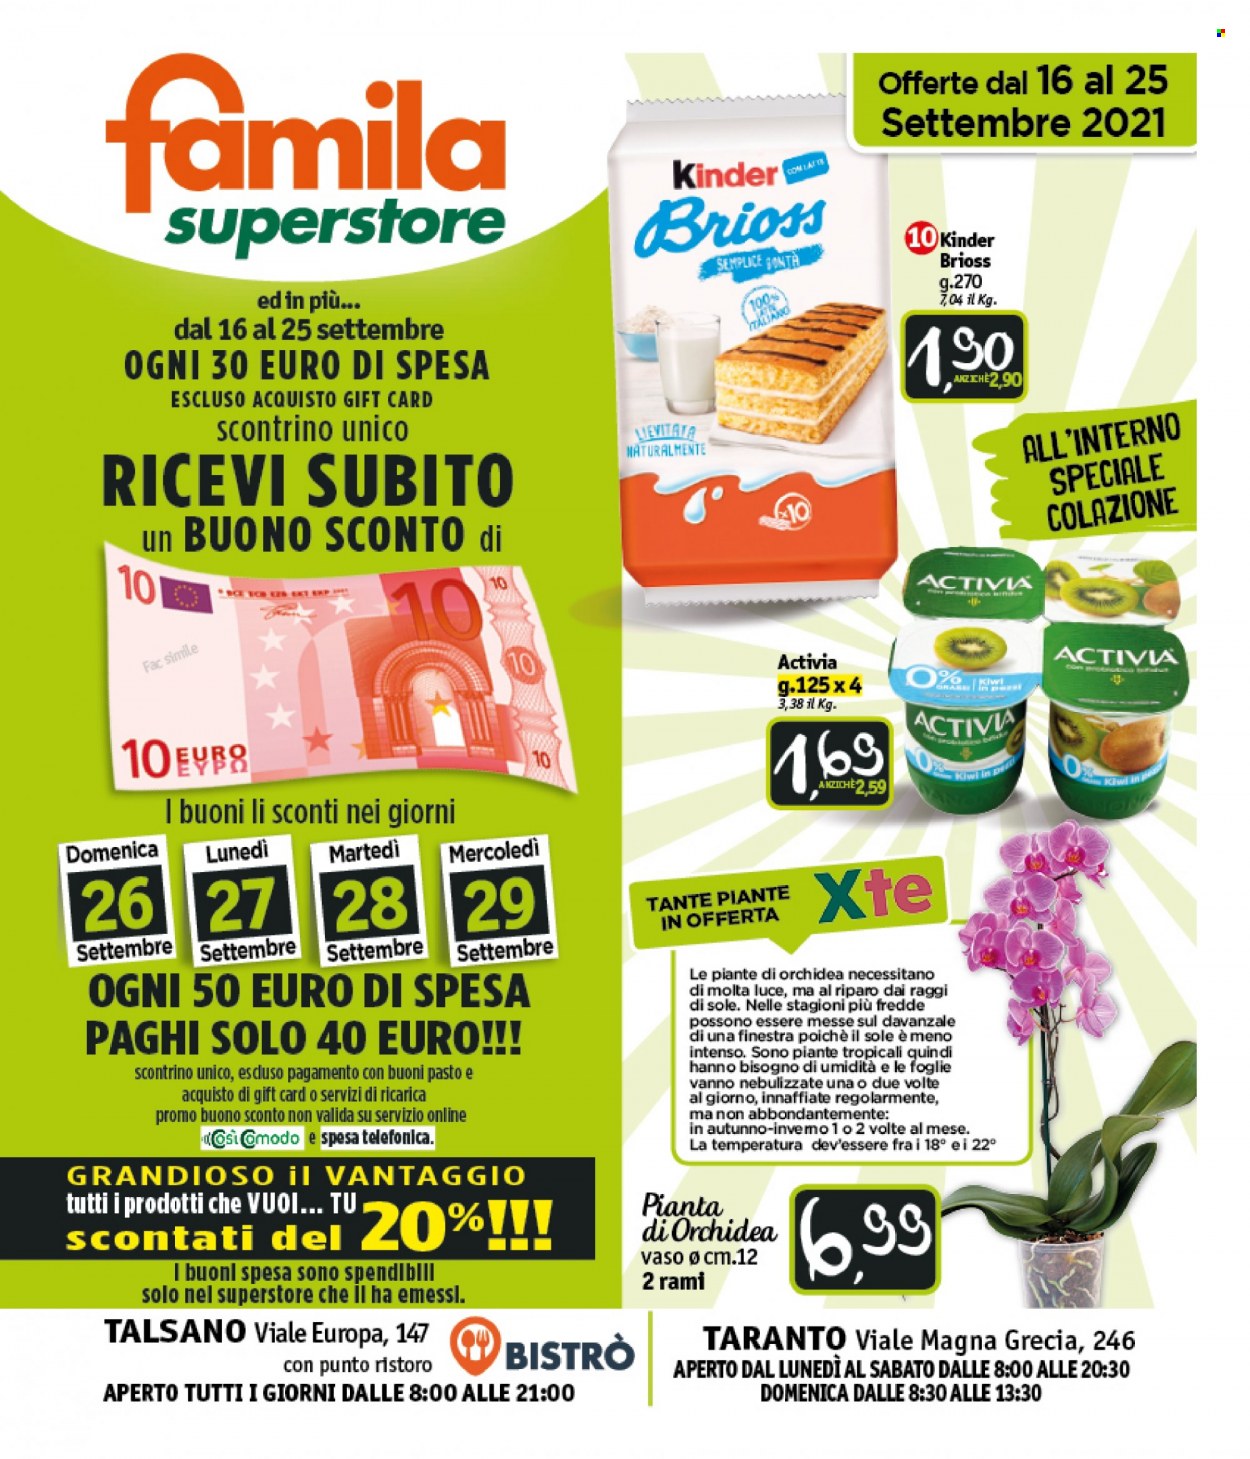 thumbnail - Volantino Famila - 16/9/2021 - 25/9/2021 - Prodotti in offerta - Kinder Brioss, Kinder, Activia, luce. Pagina 1.